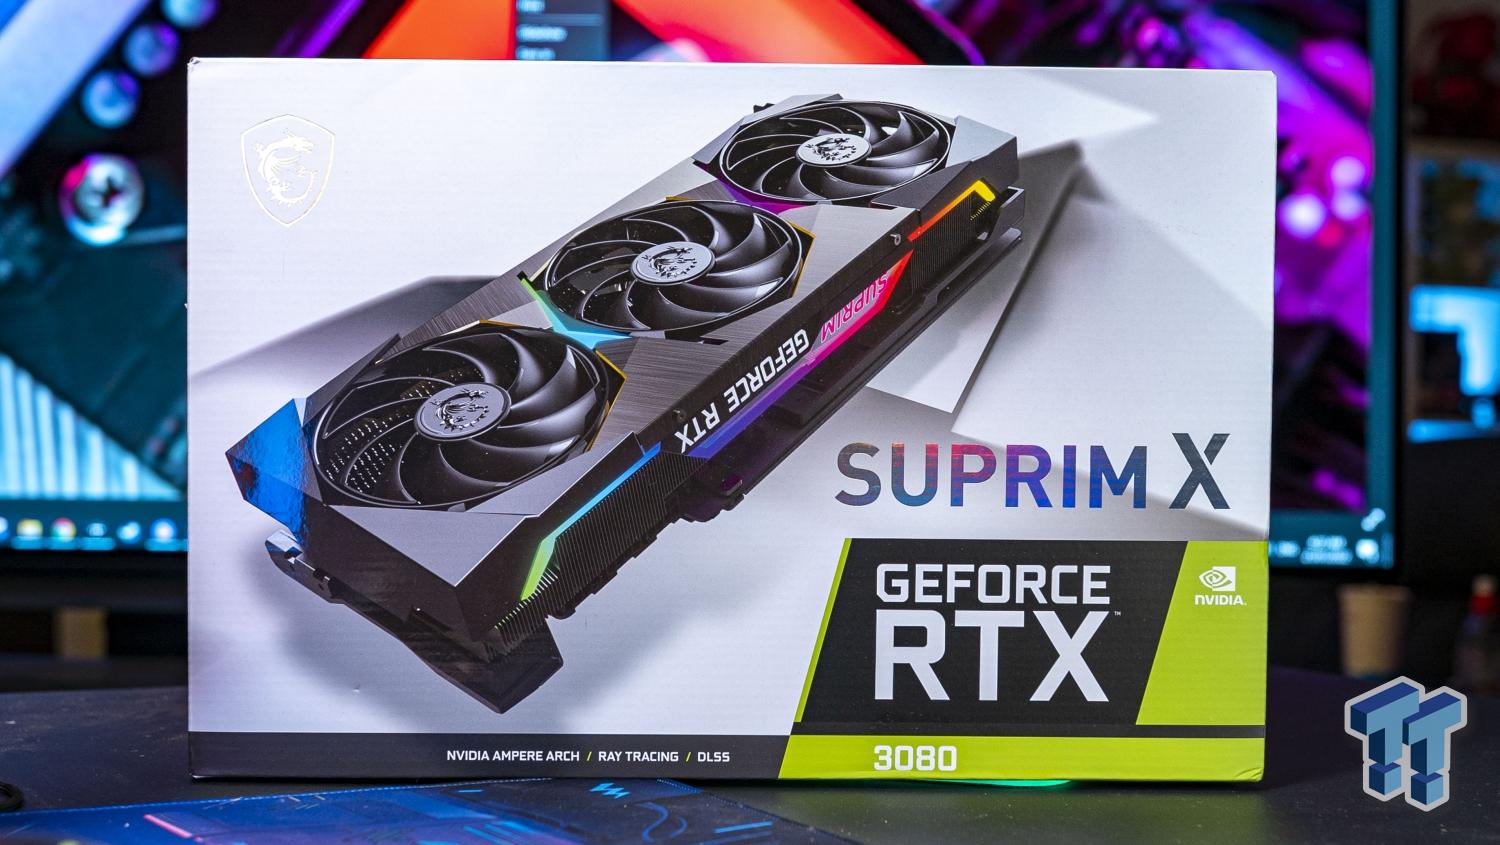 MSI GeForce RTX  SUPRIM X G LHR Review